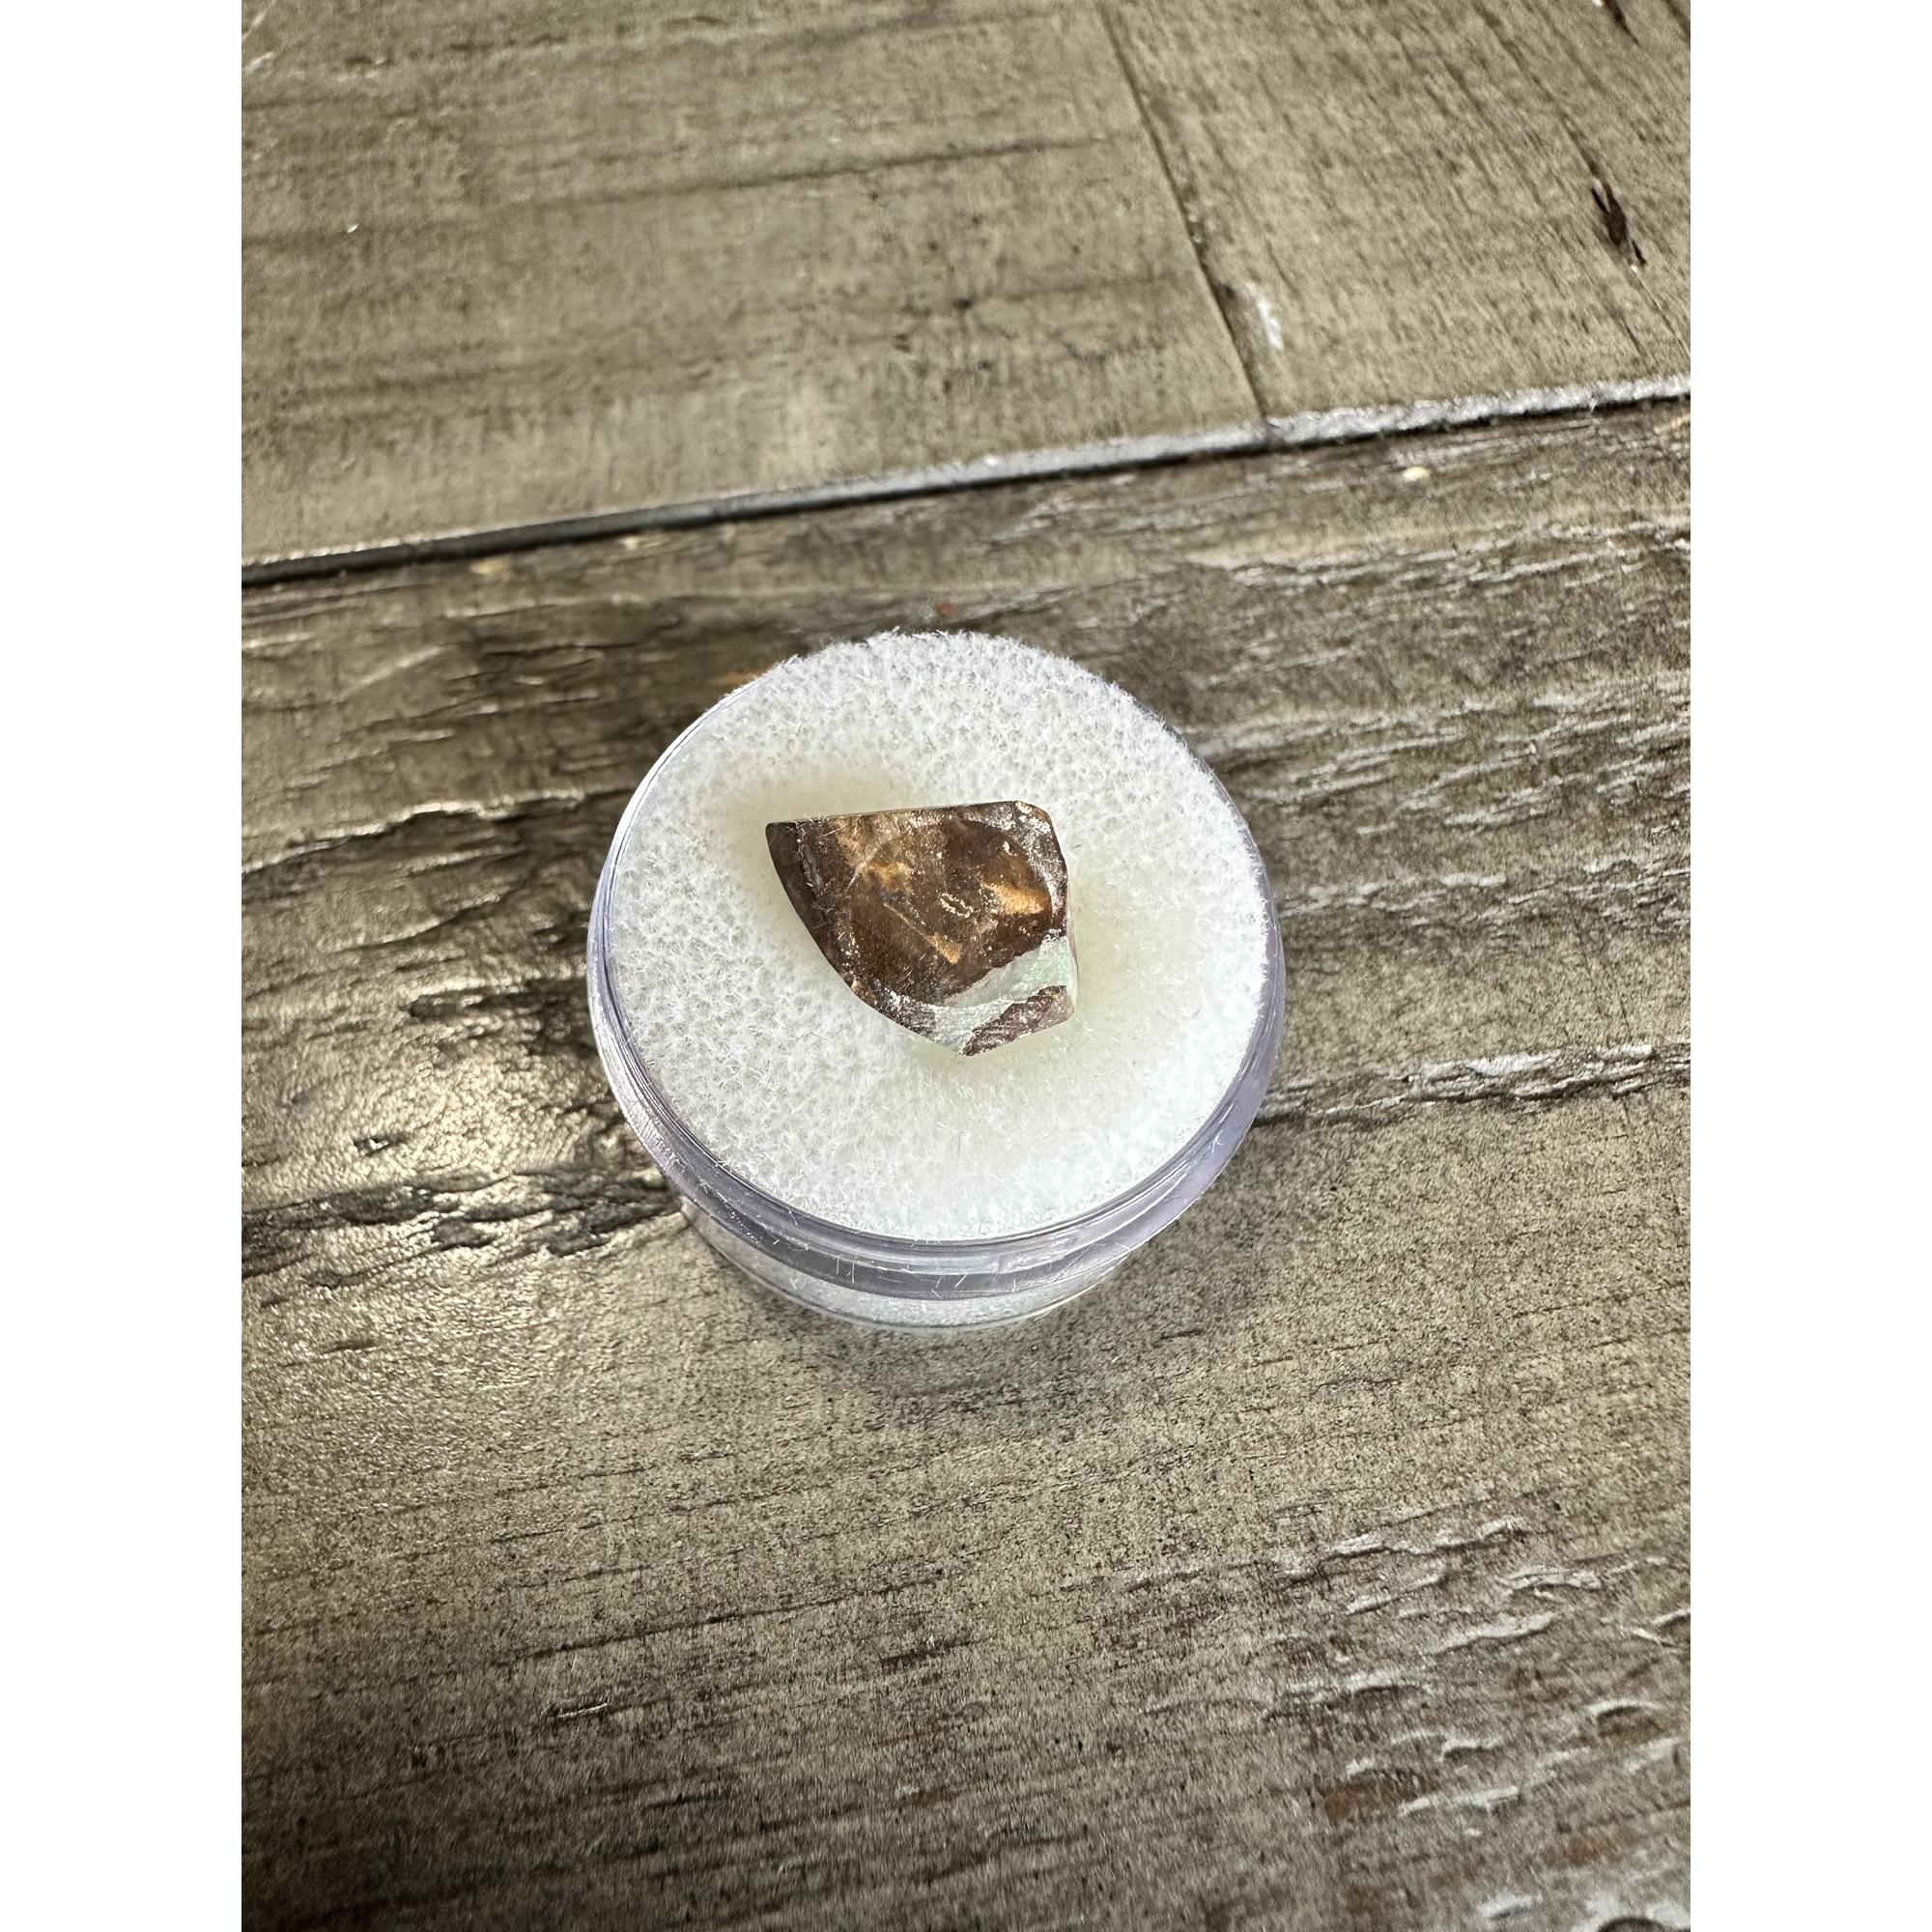 Opal, boulder Australia, perfect for a pendant Prehistoric Online